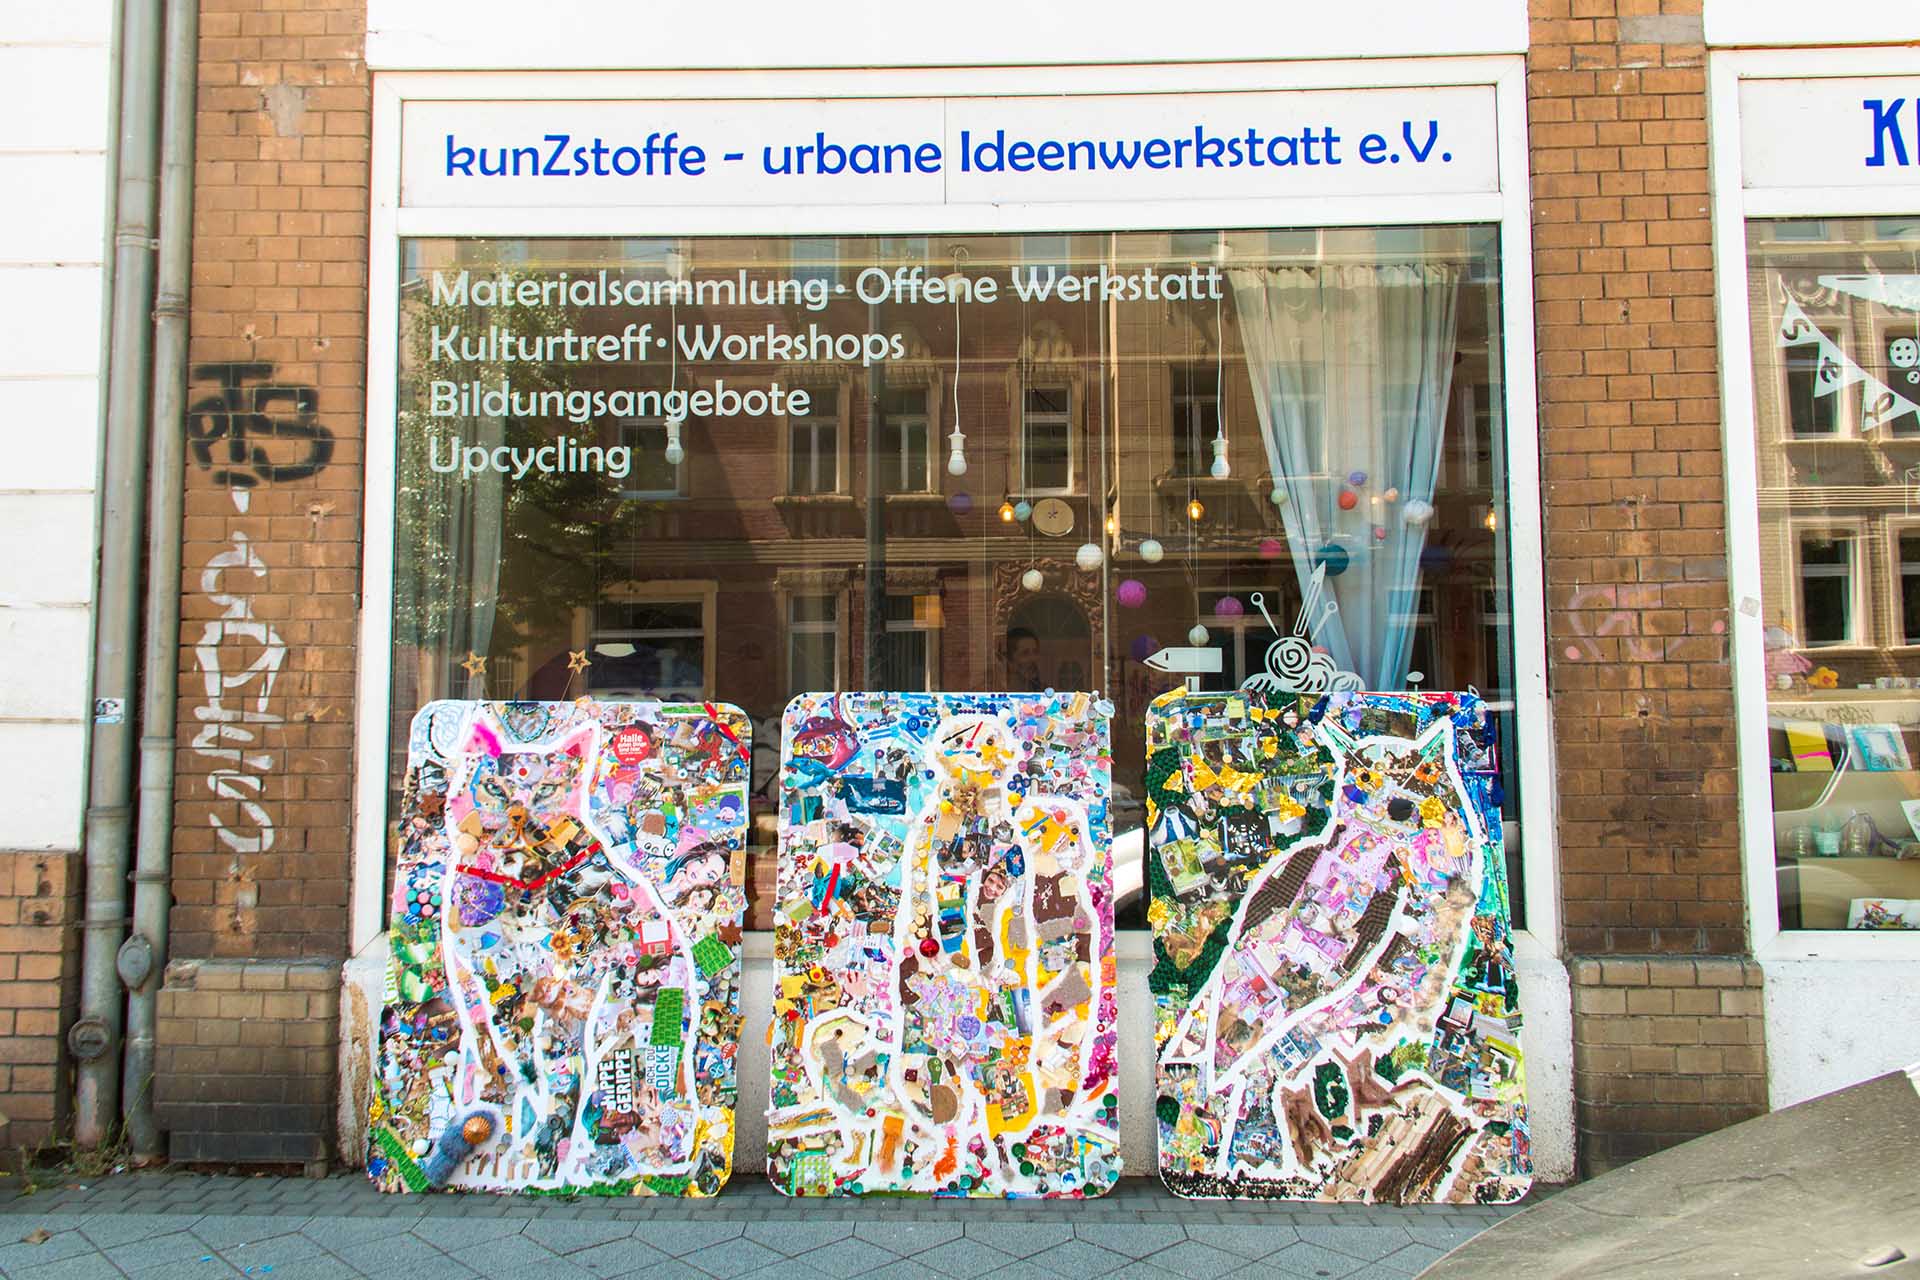 Wiebke Kirchner / Workshop "(m)useful material" / Glaucha Grundschule Halle / in Kooperation mit kunZstoffe - urbane Ideenwerkstatt e.V. / 2022